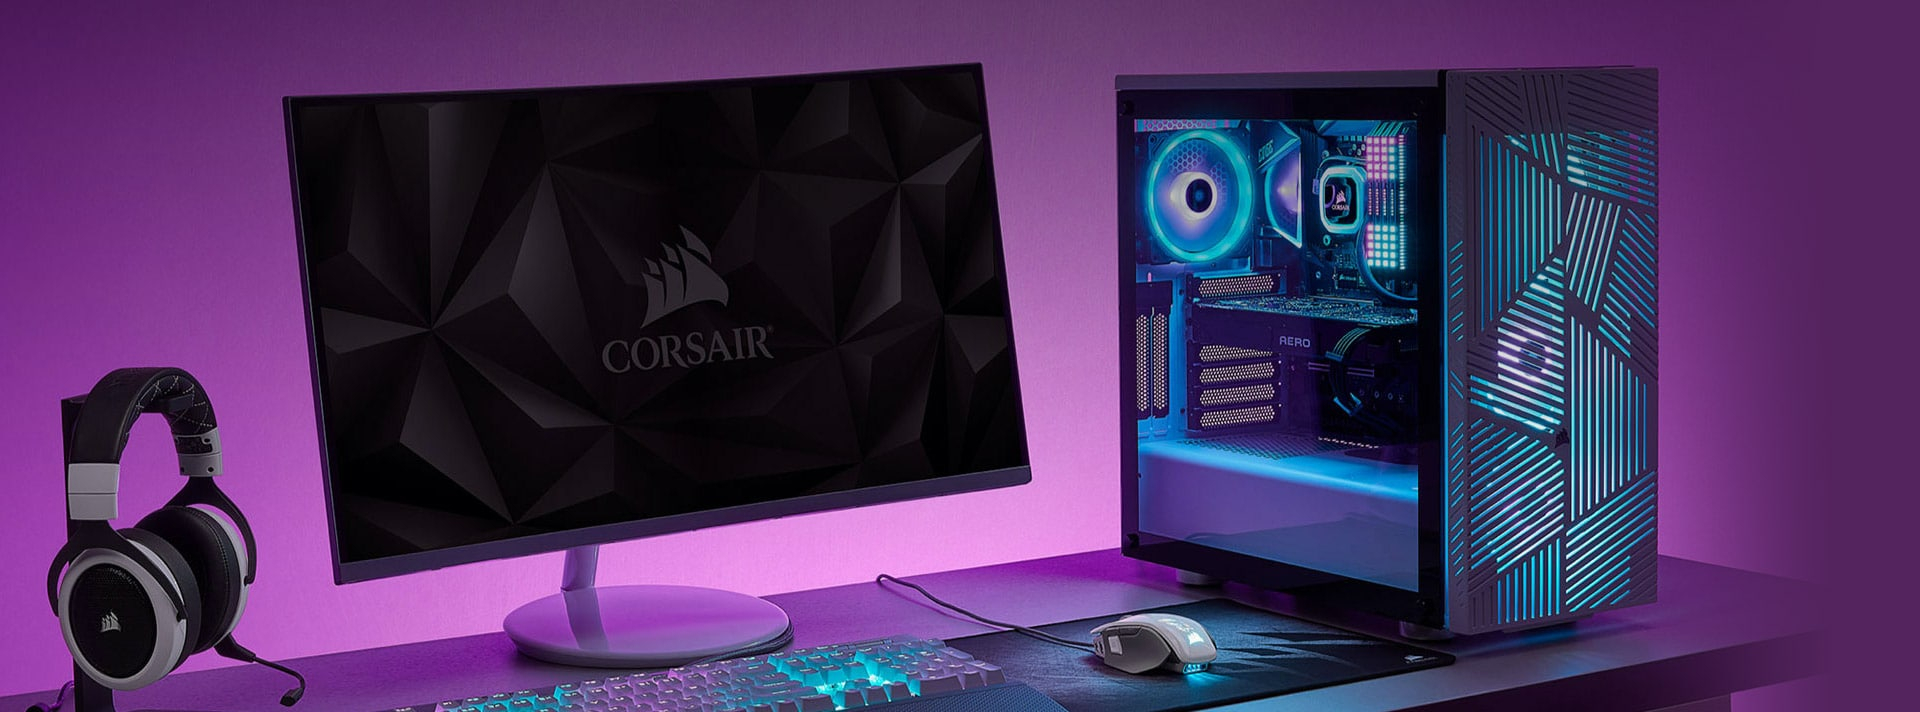 PC Gamer - Corsair